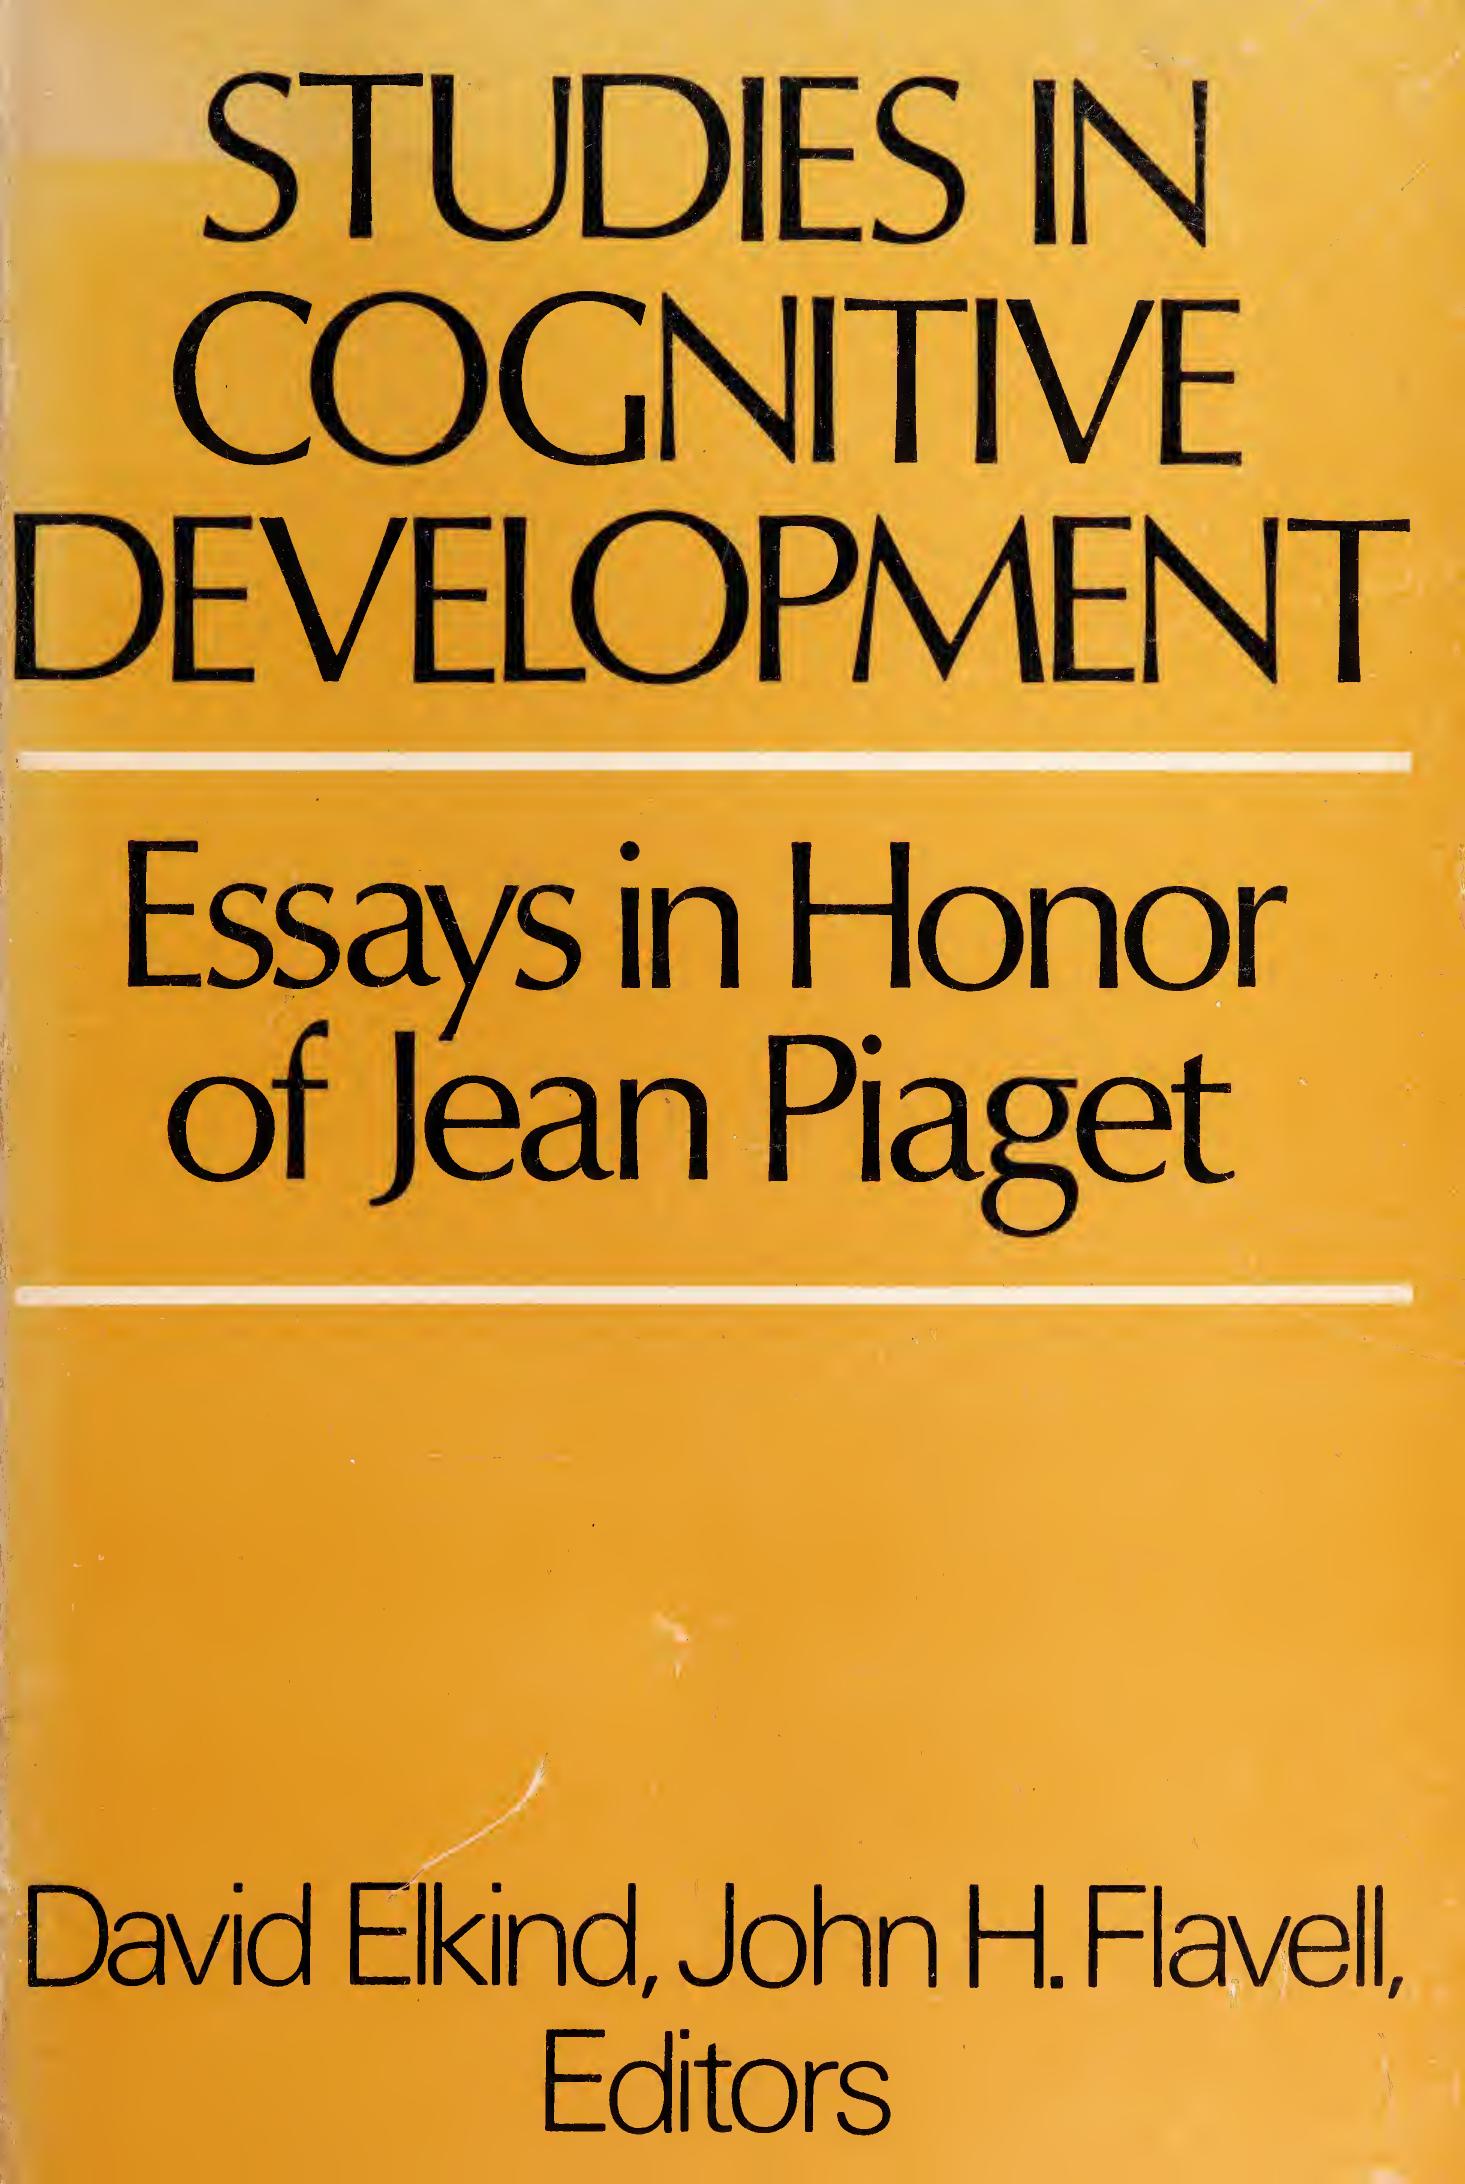 Studies in cognitive development; essays in honor of Jean Piaget